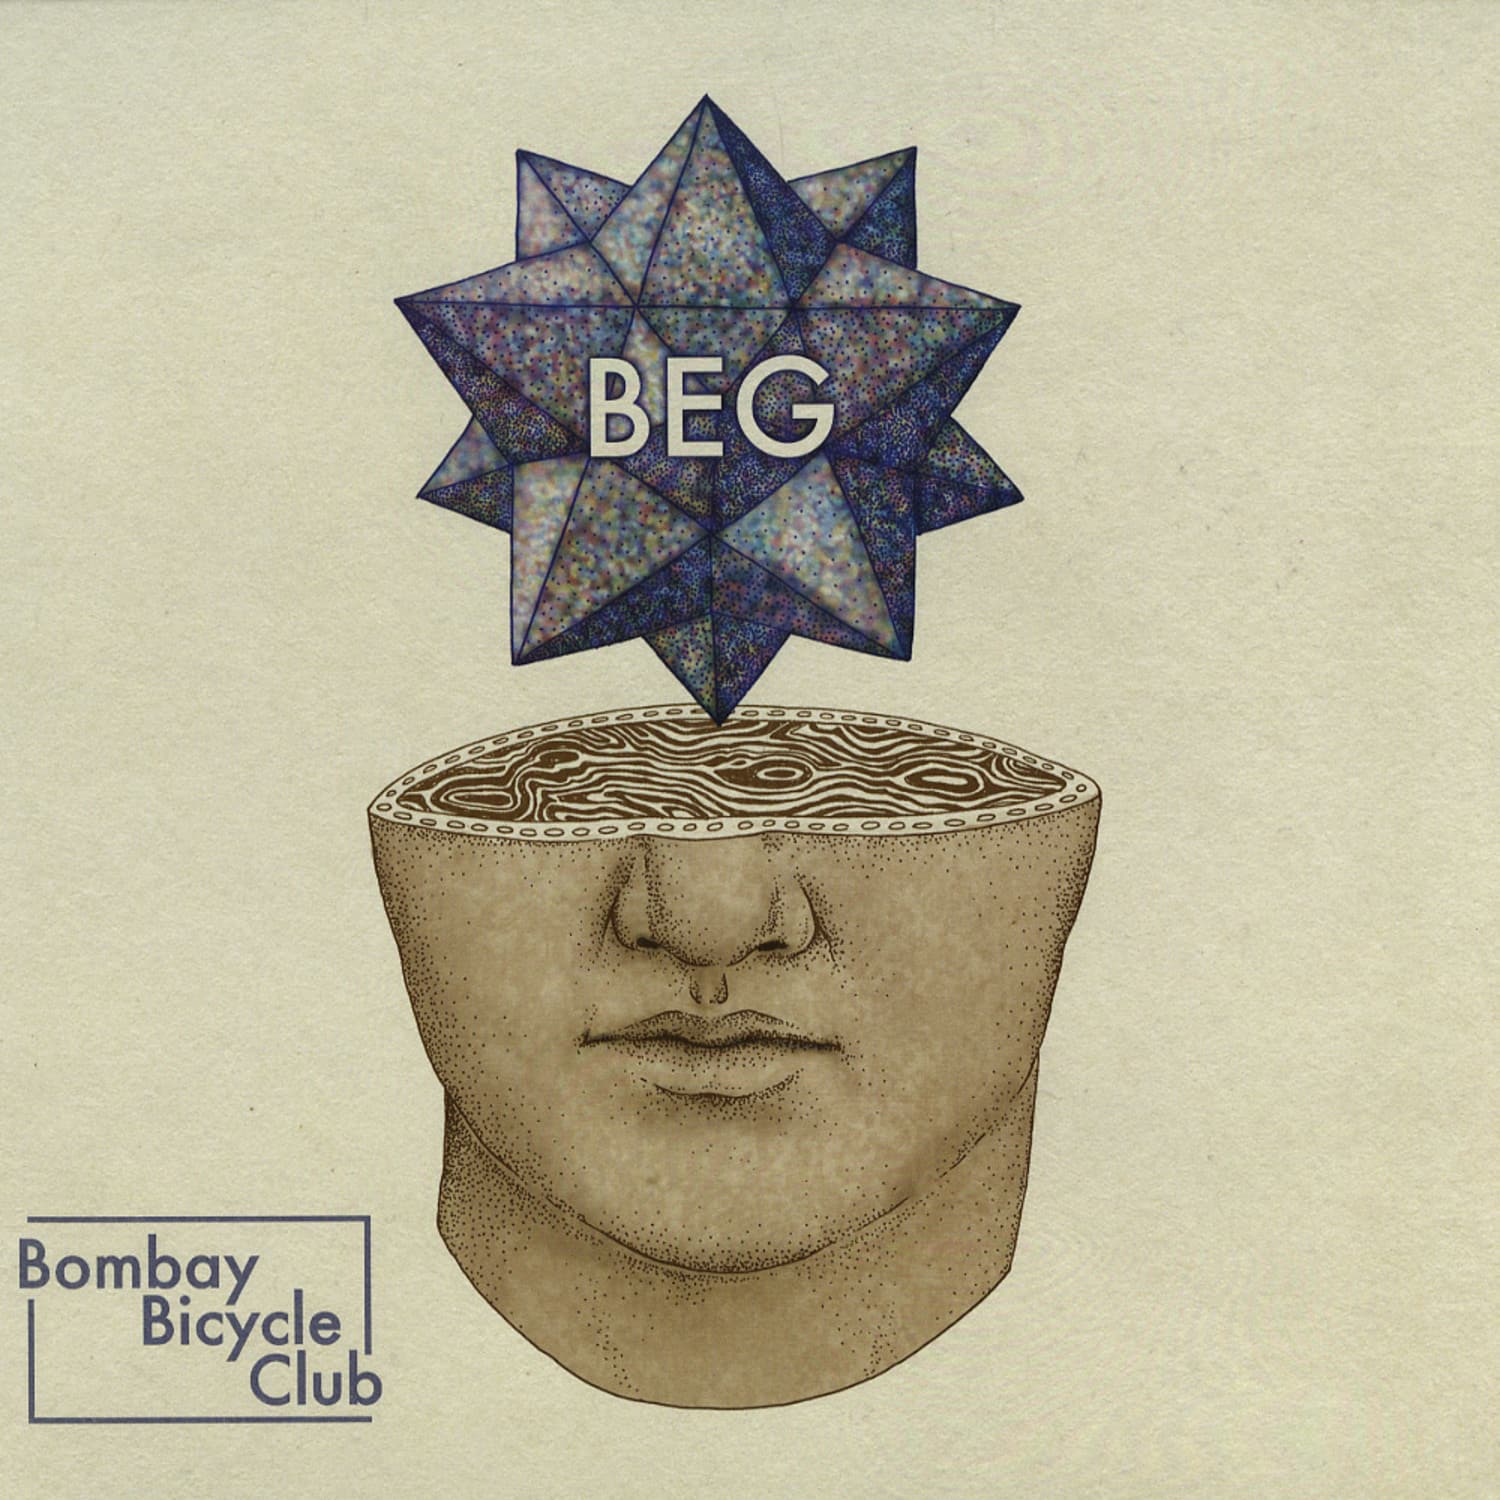 Bombay Bicycle Club - BEG 